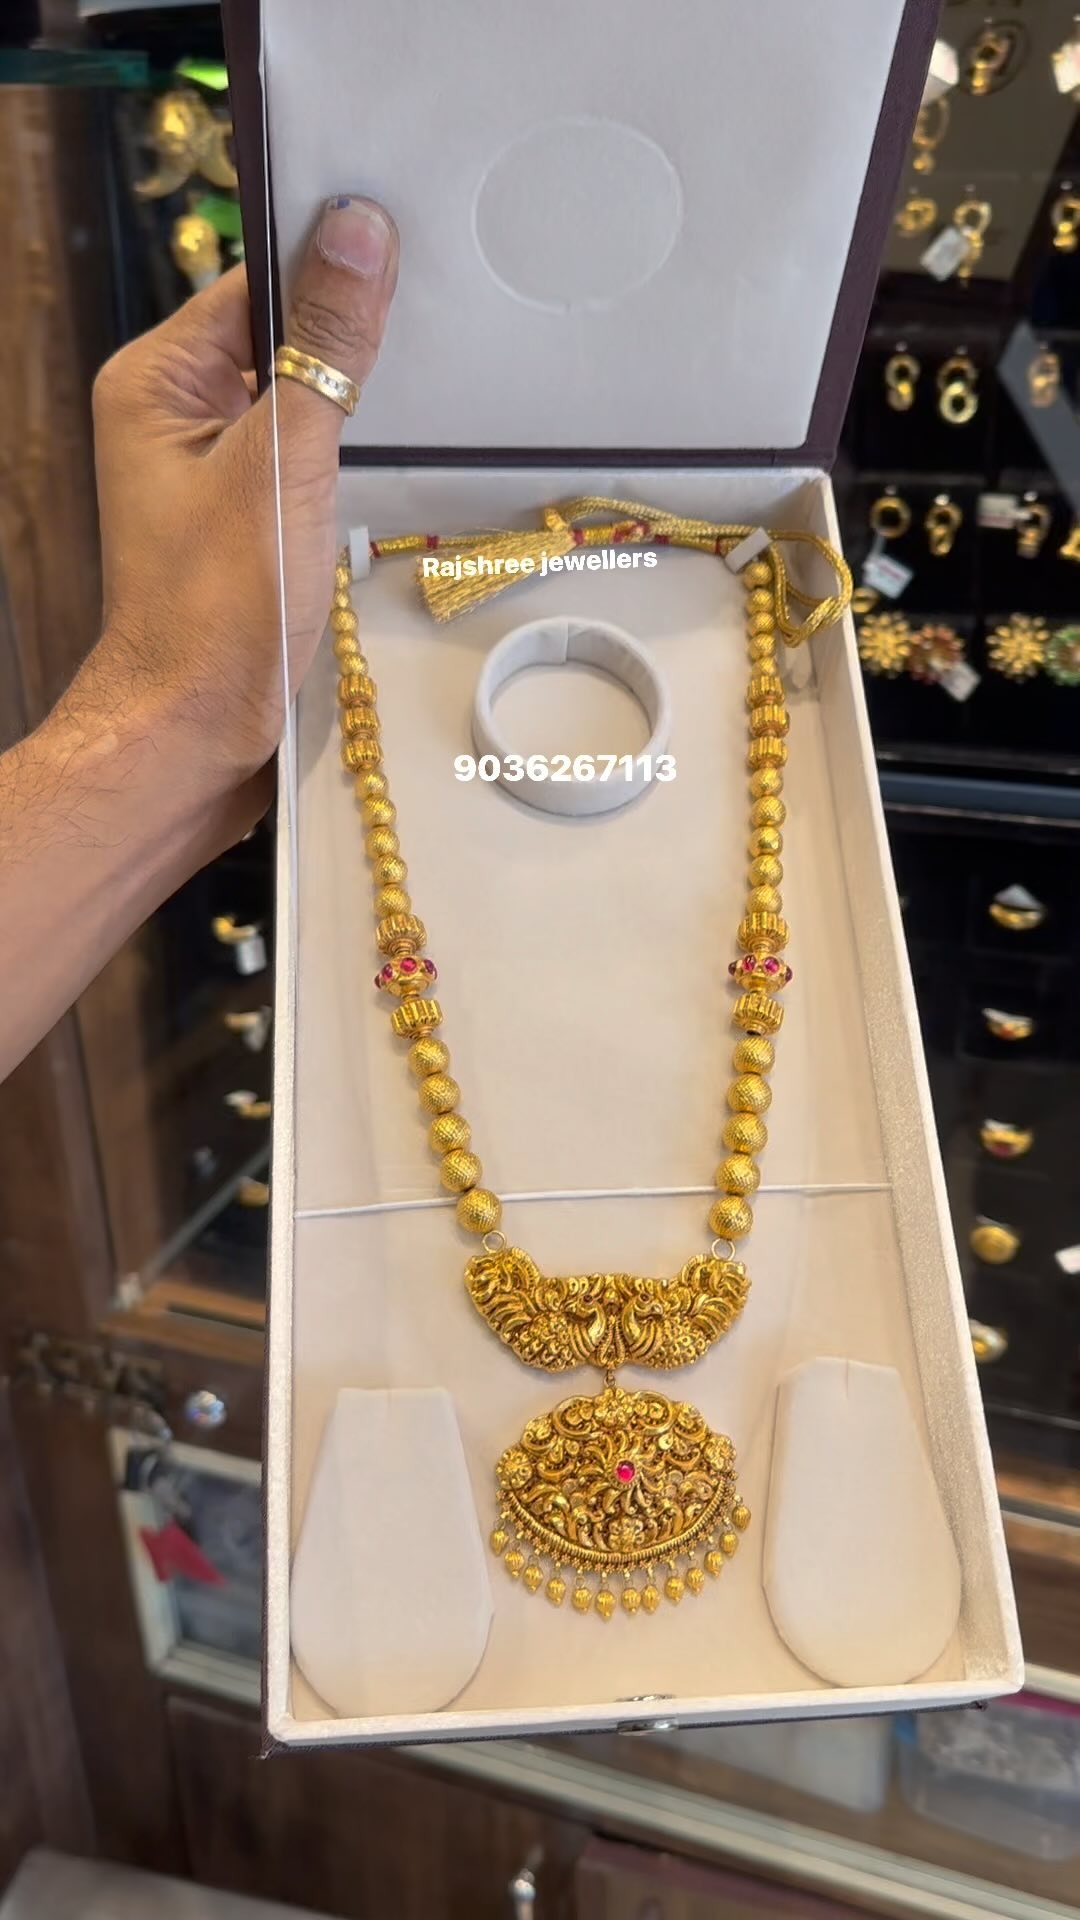 Ball Design Flower Pendant Gold Long Necklace From 'Rajshree Jeweller'